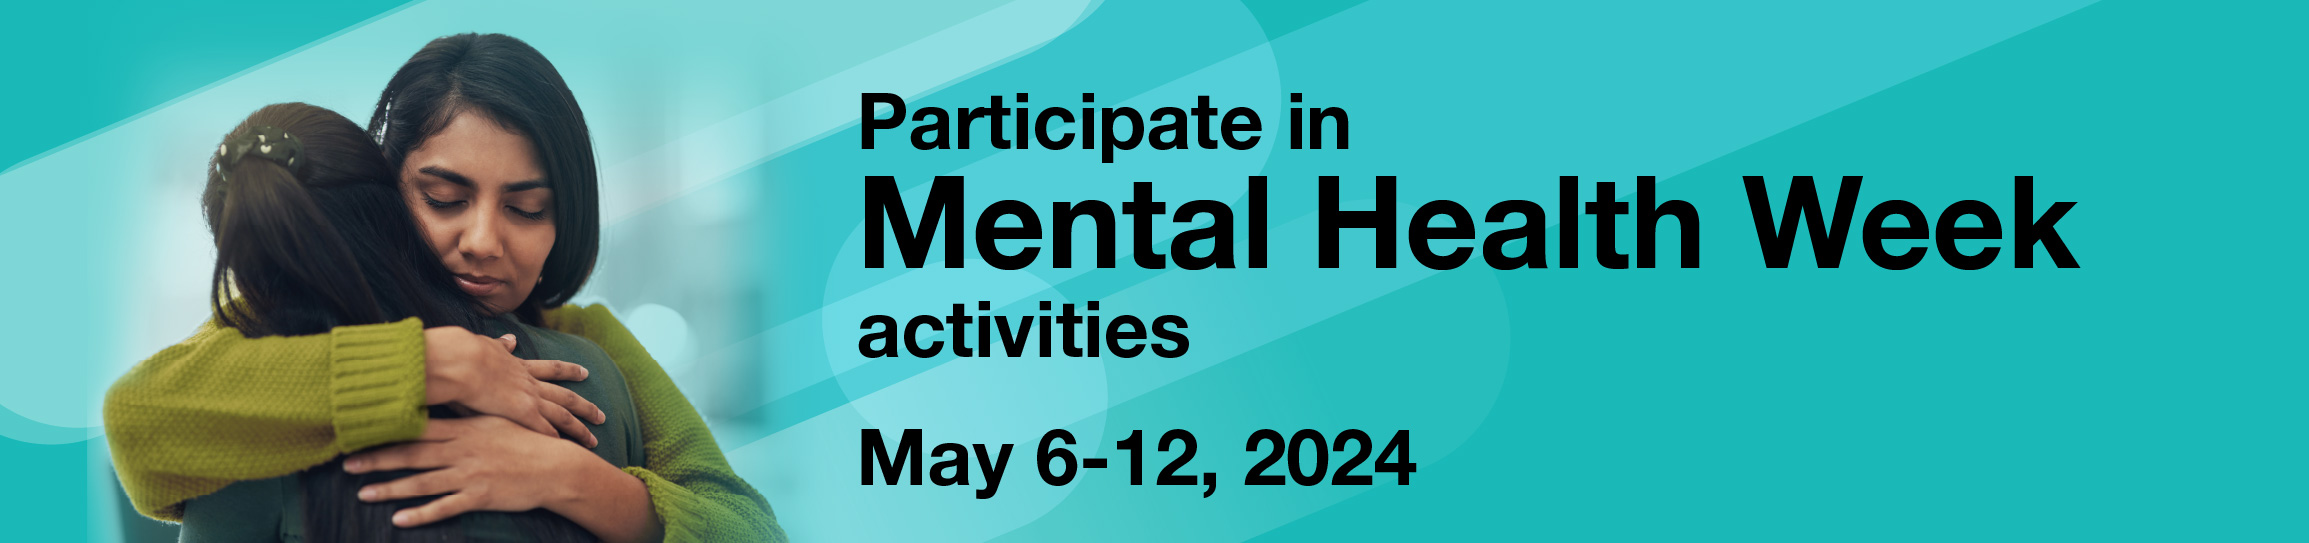 Participate in Mental Health Week activities